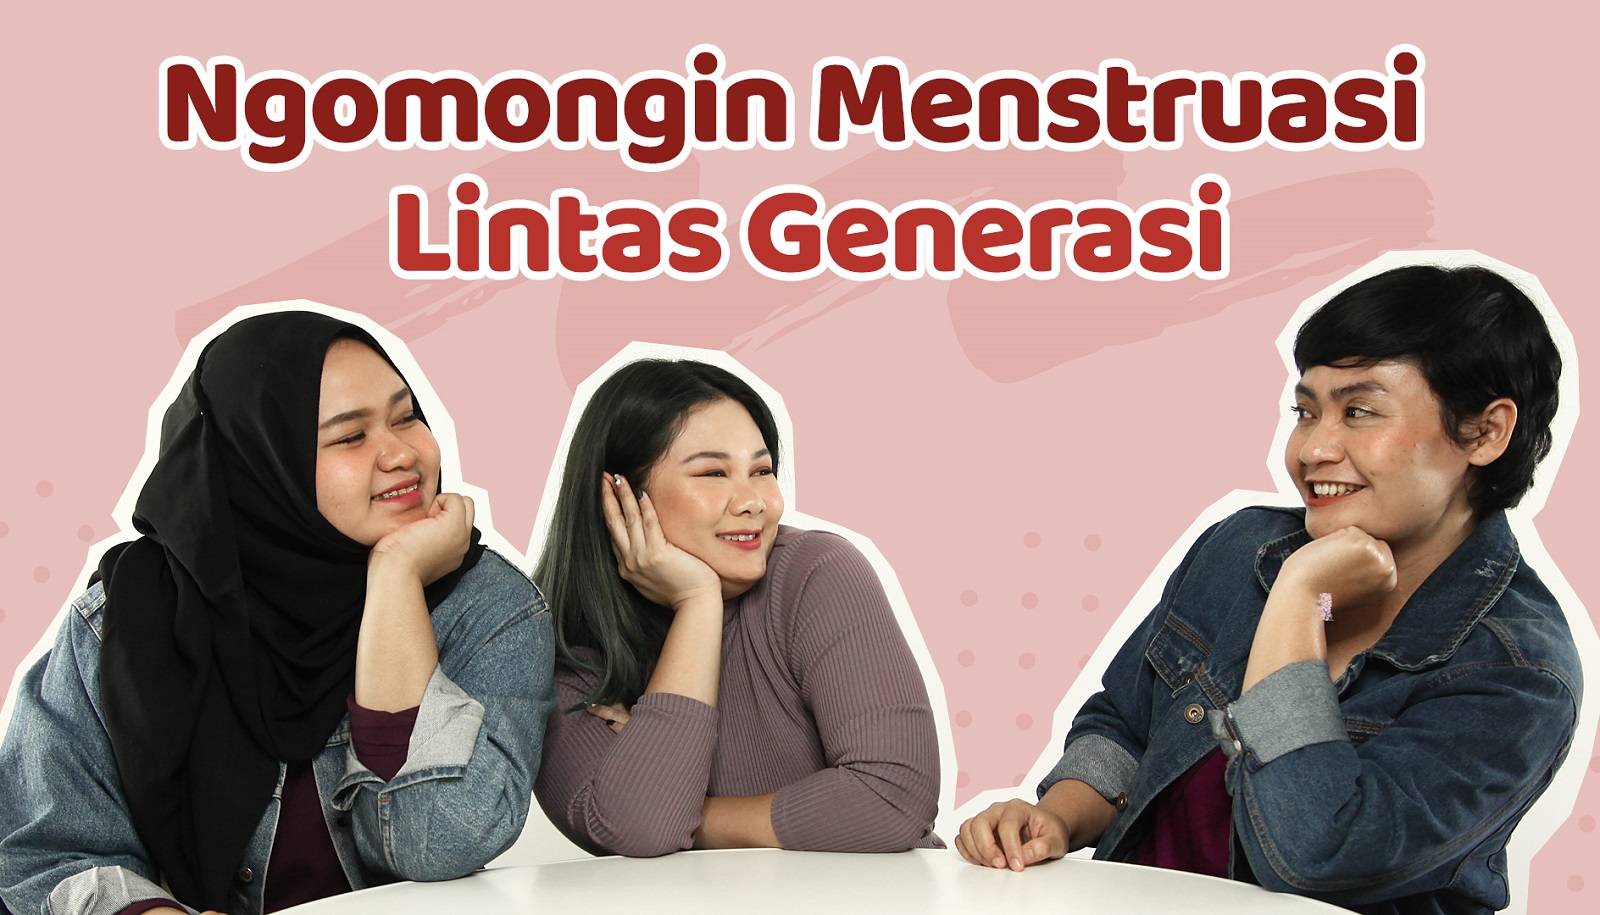 Ngomongin Menstruasi Lintas Generasi